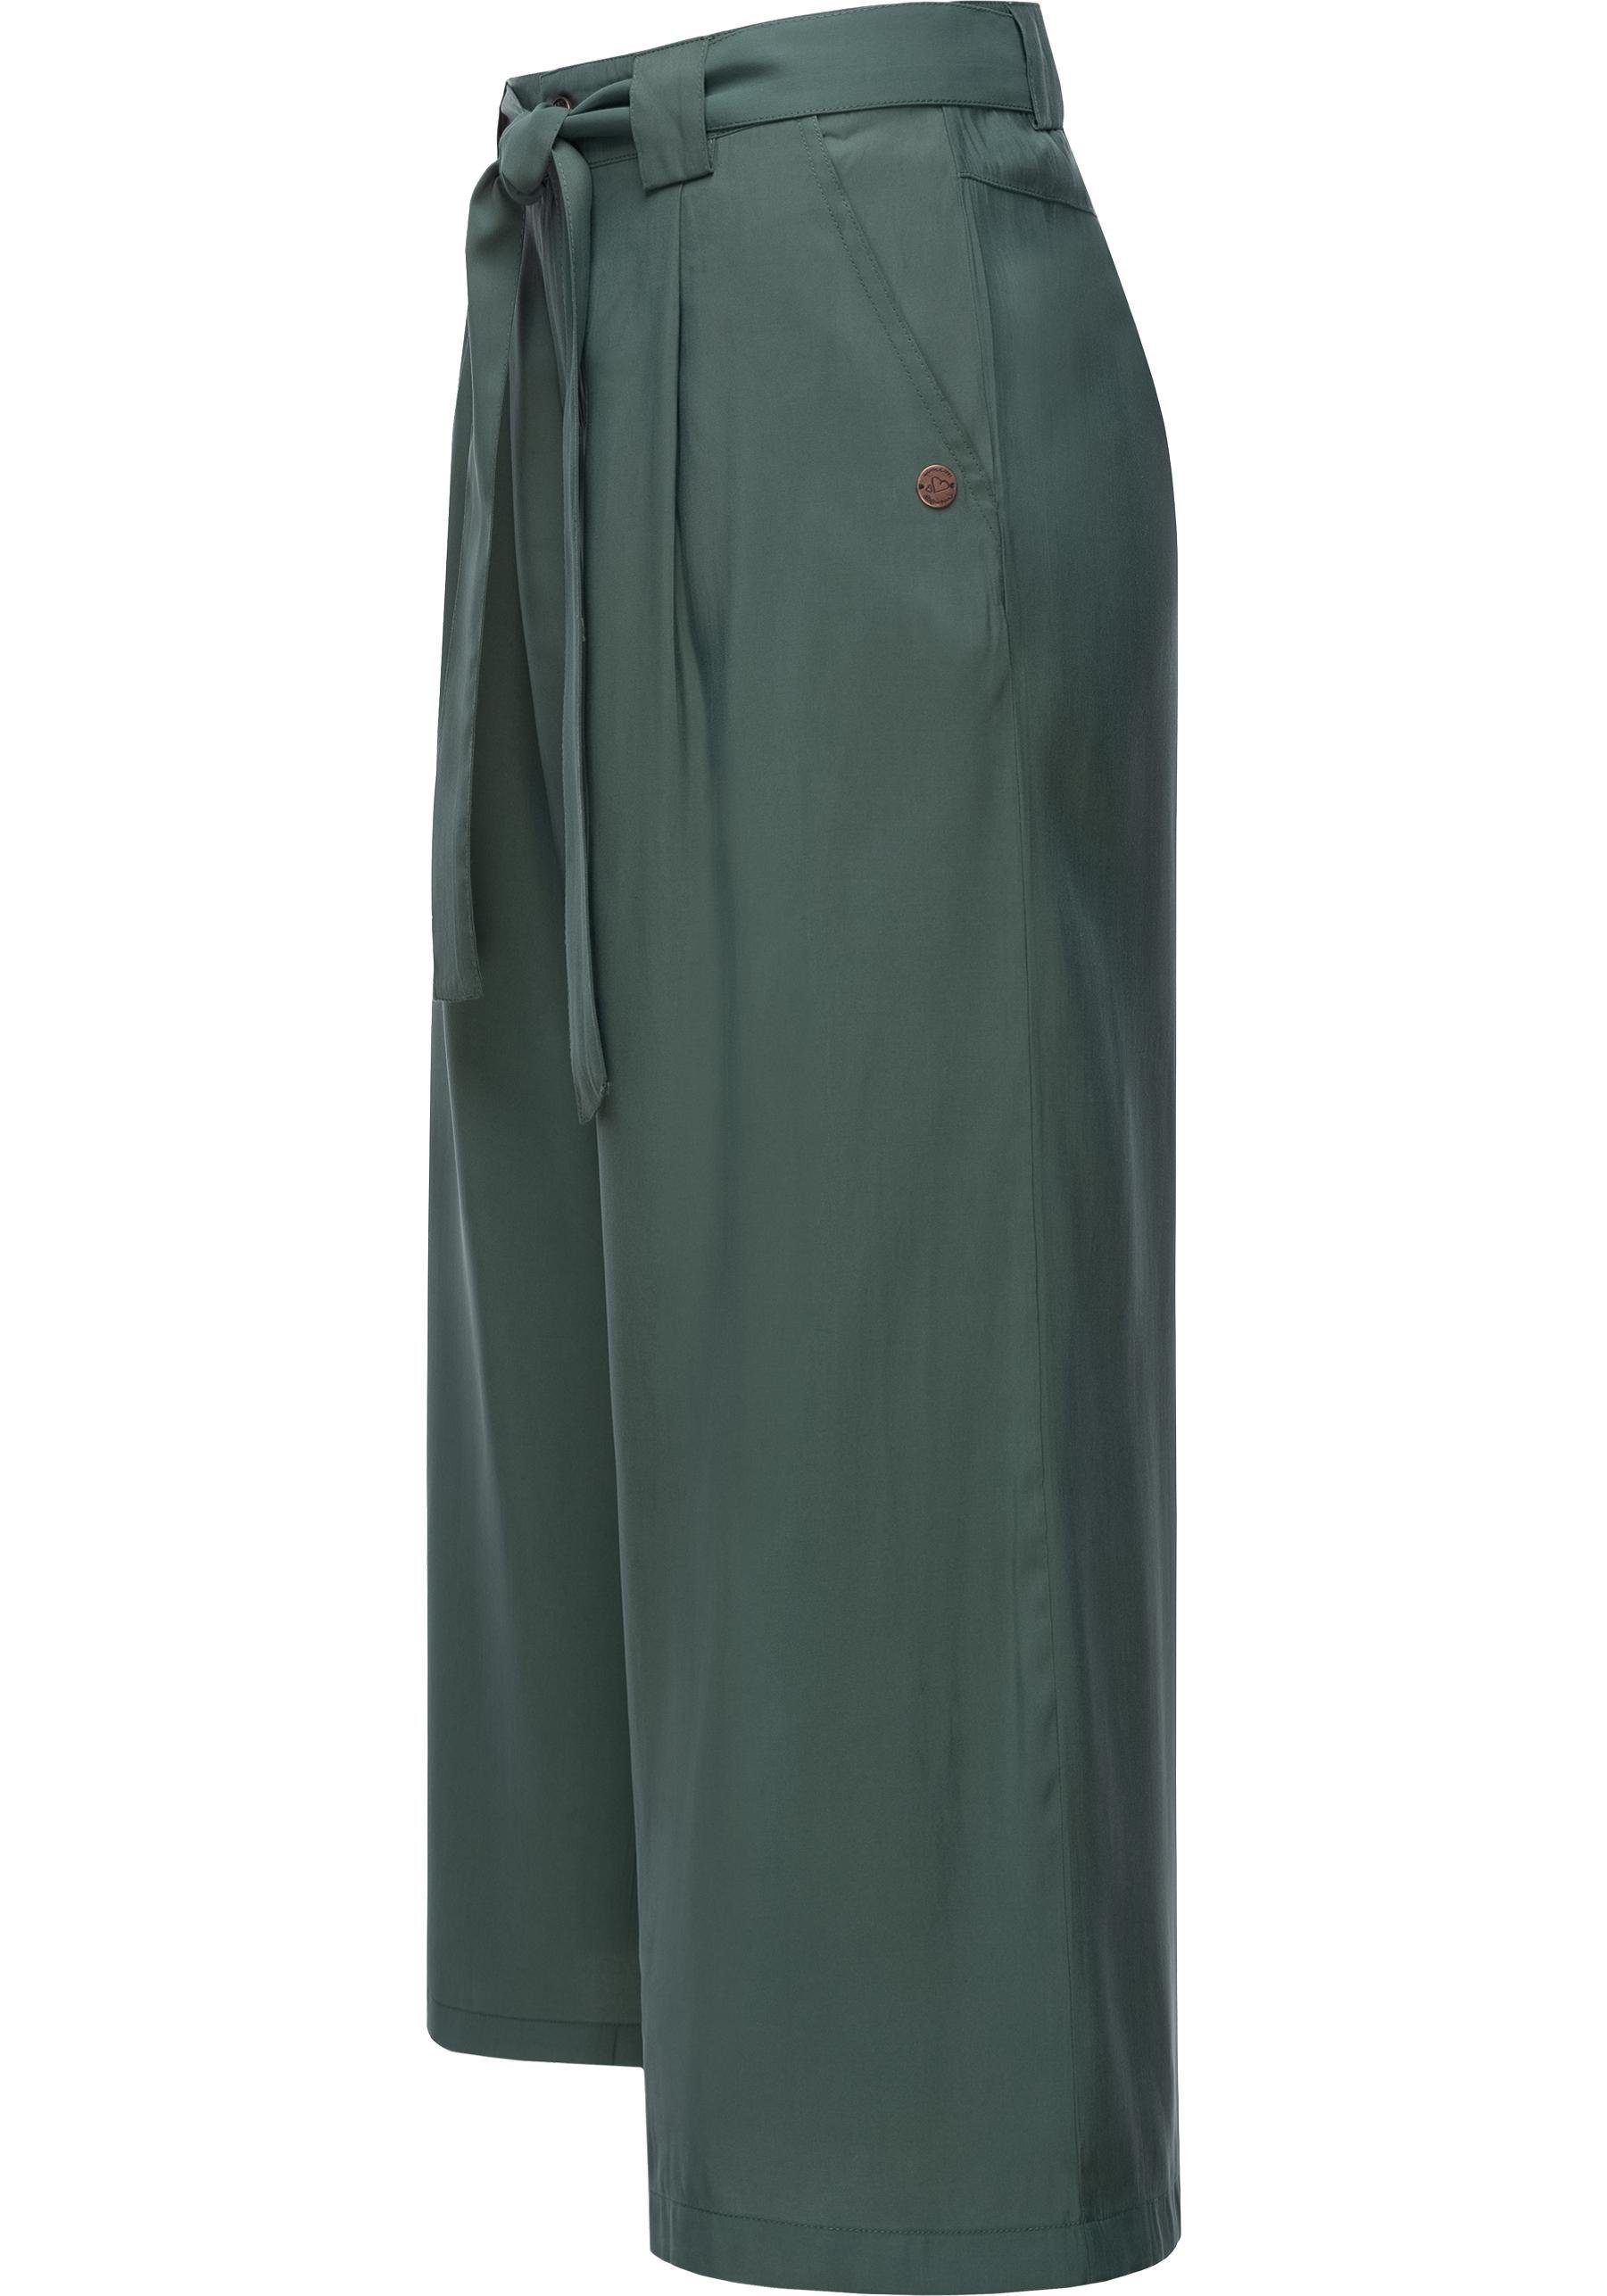 Stylische Ragwear Gürtel Hose Yarai mit dunkelgrün Culotte Stoffhose